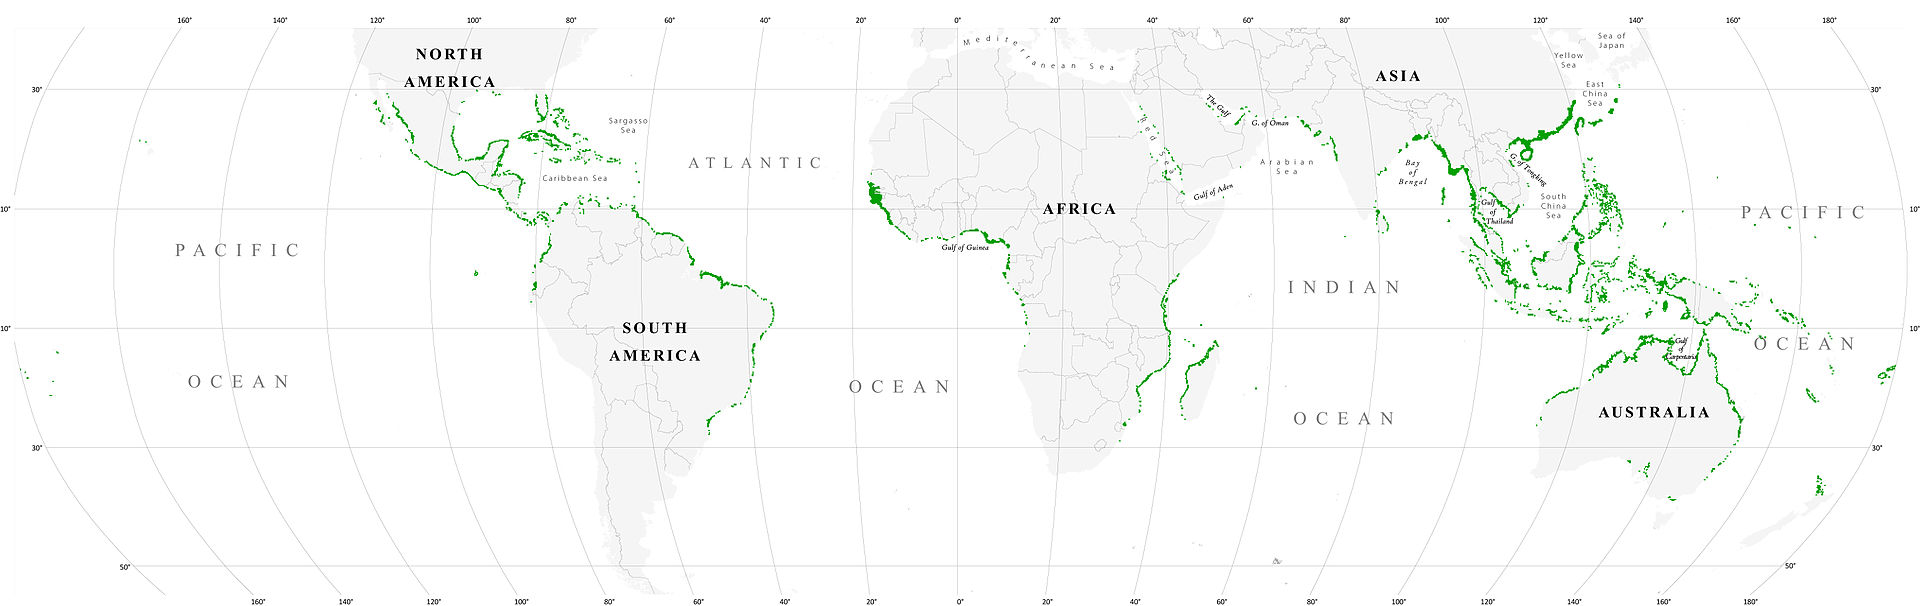 World_map_mangrove_distribution